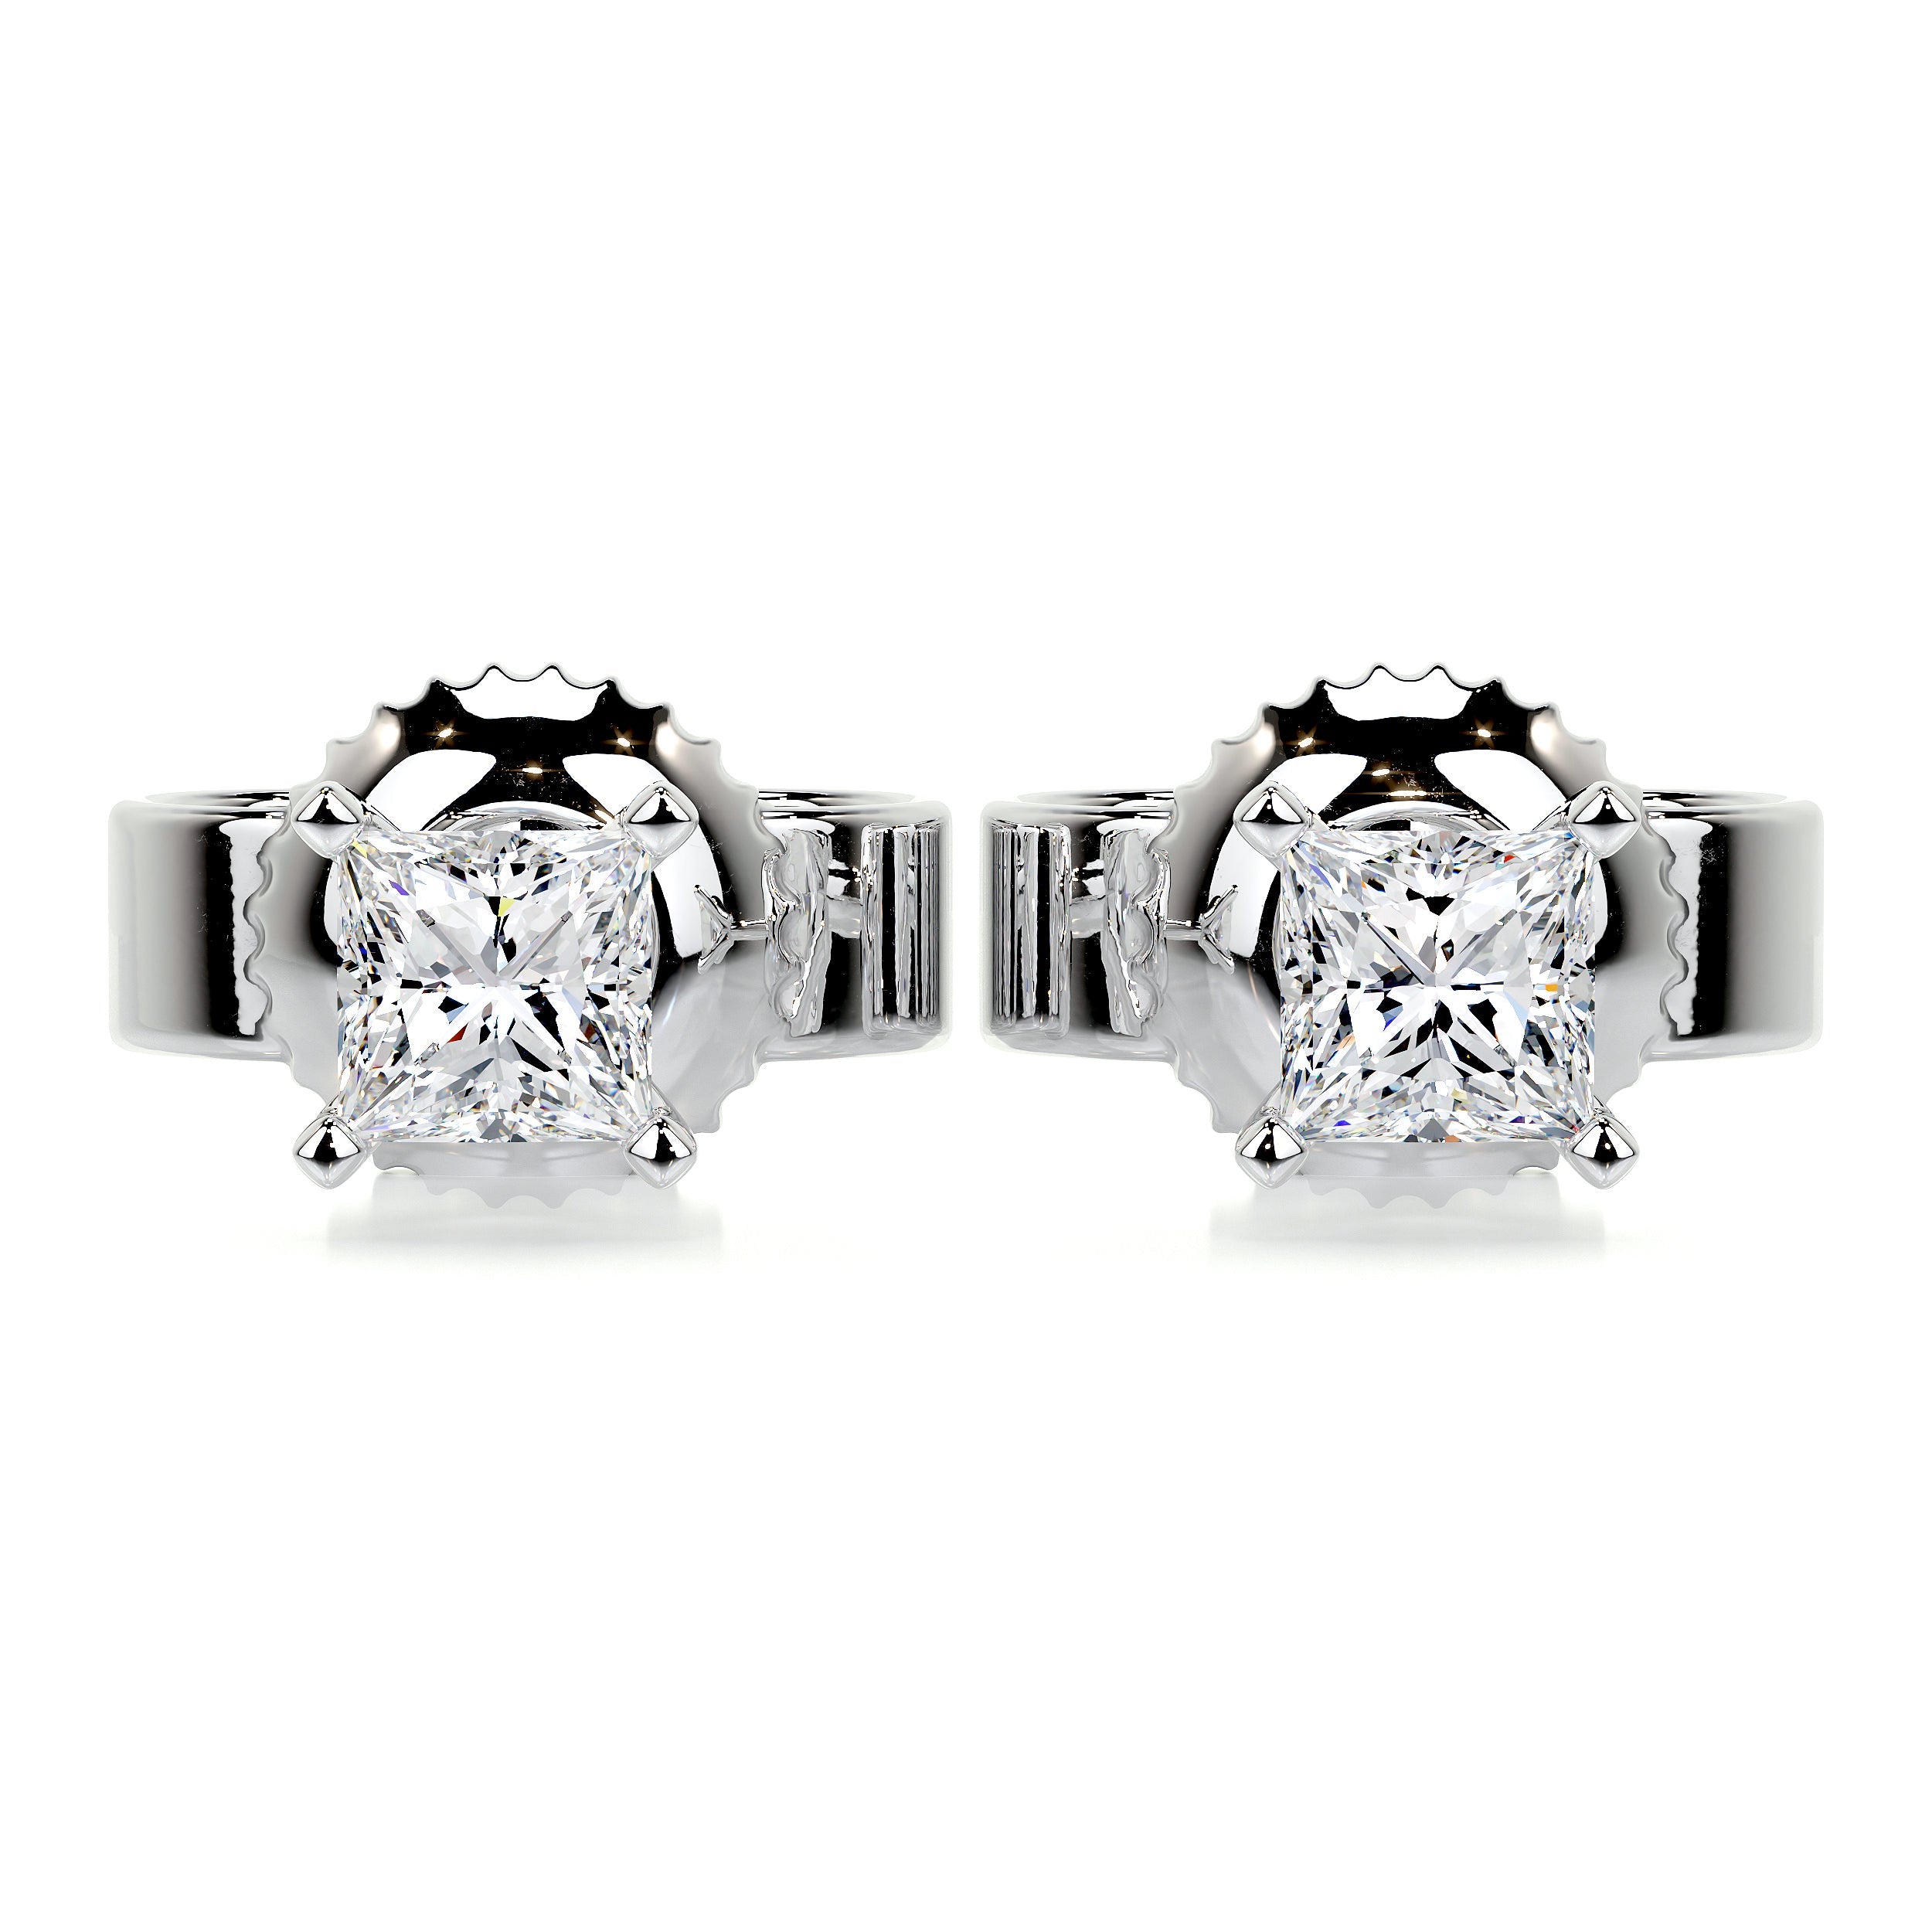 Jamie Diamond Earrings   (1 Carat) -18K White Gold